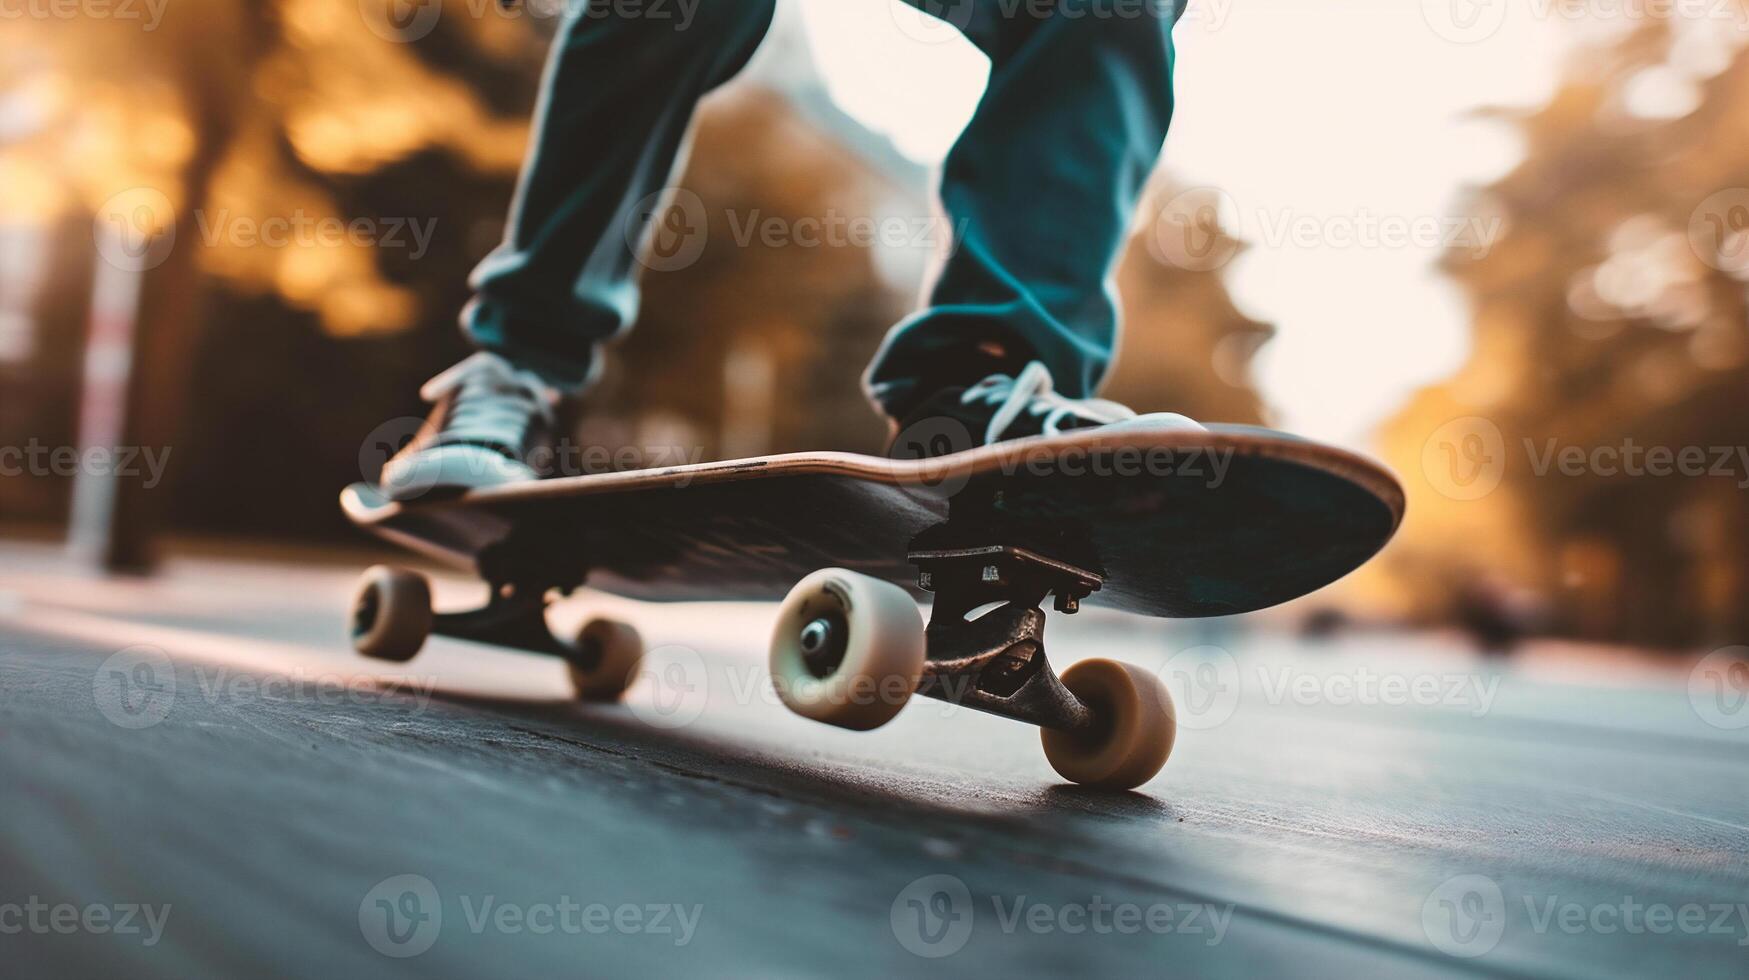 AI generated skateboarder skateboarding at skatepark sunset cityscape background photo